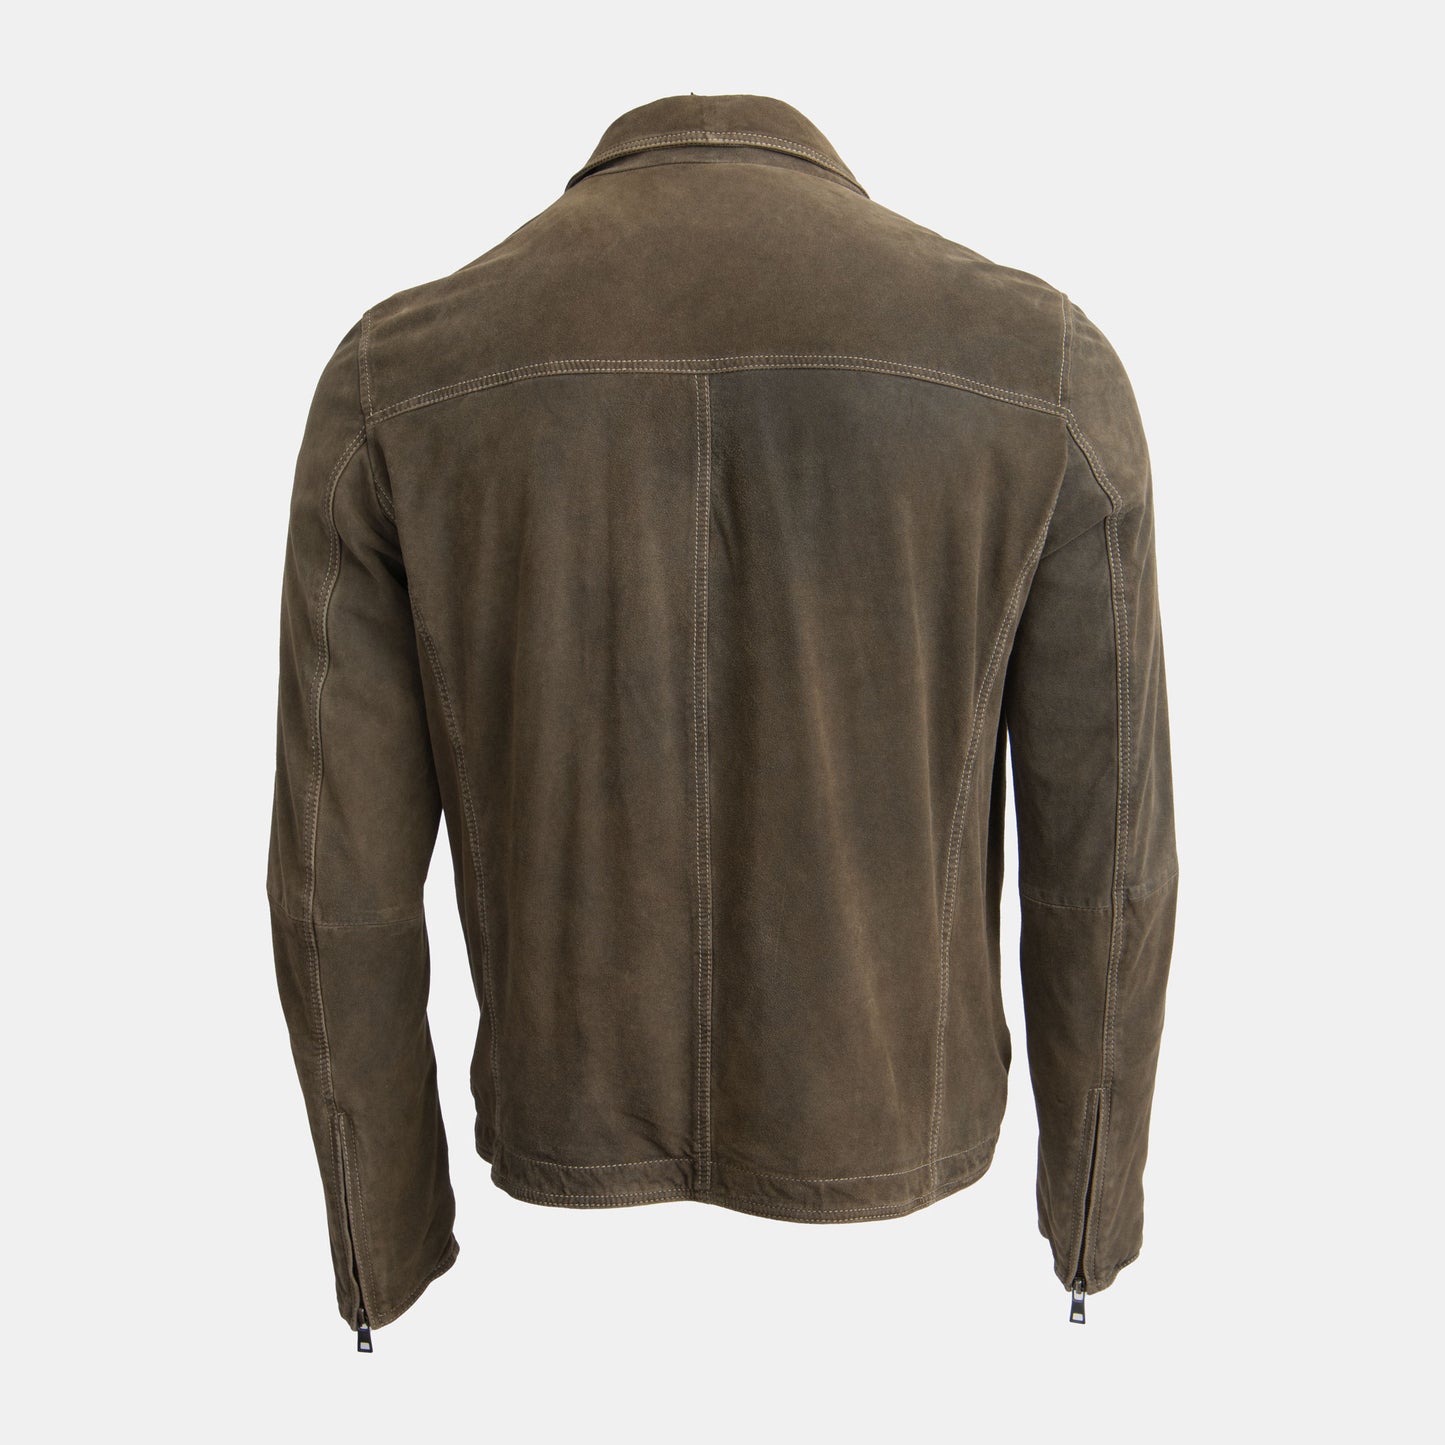 Khaki's of Carmel - Gimo's Vintage Suede Leather Jacket